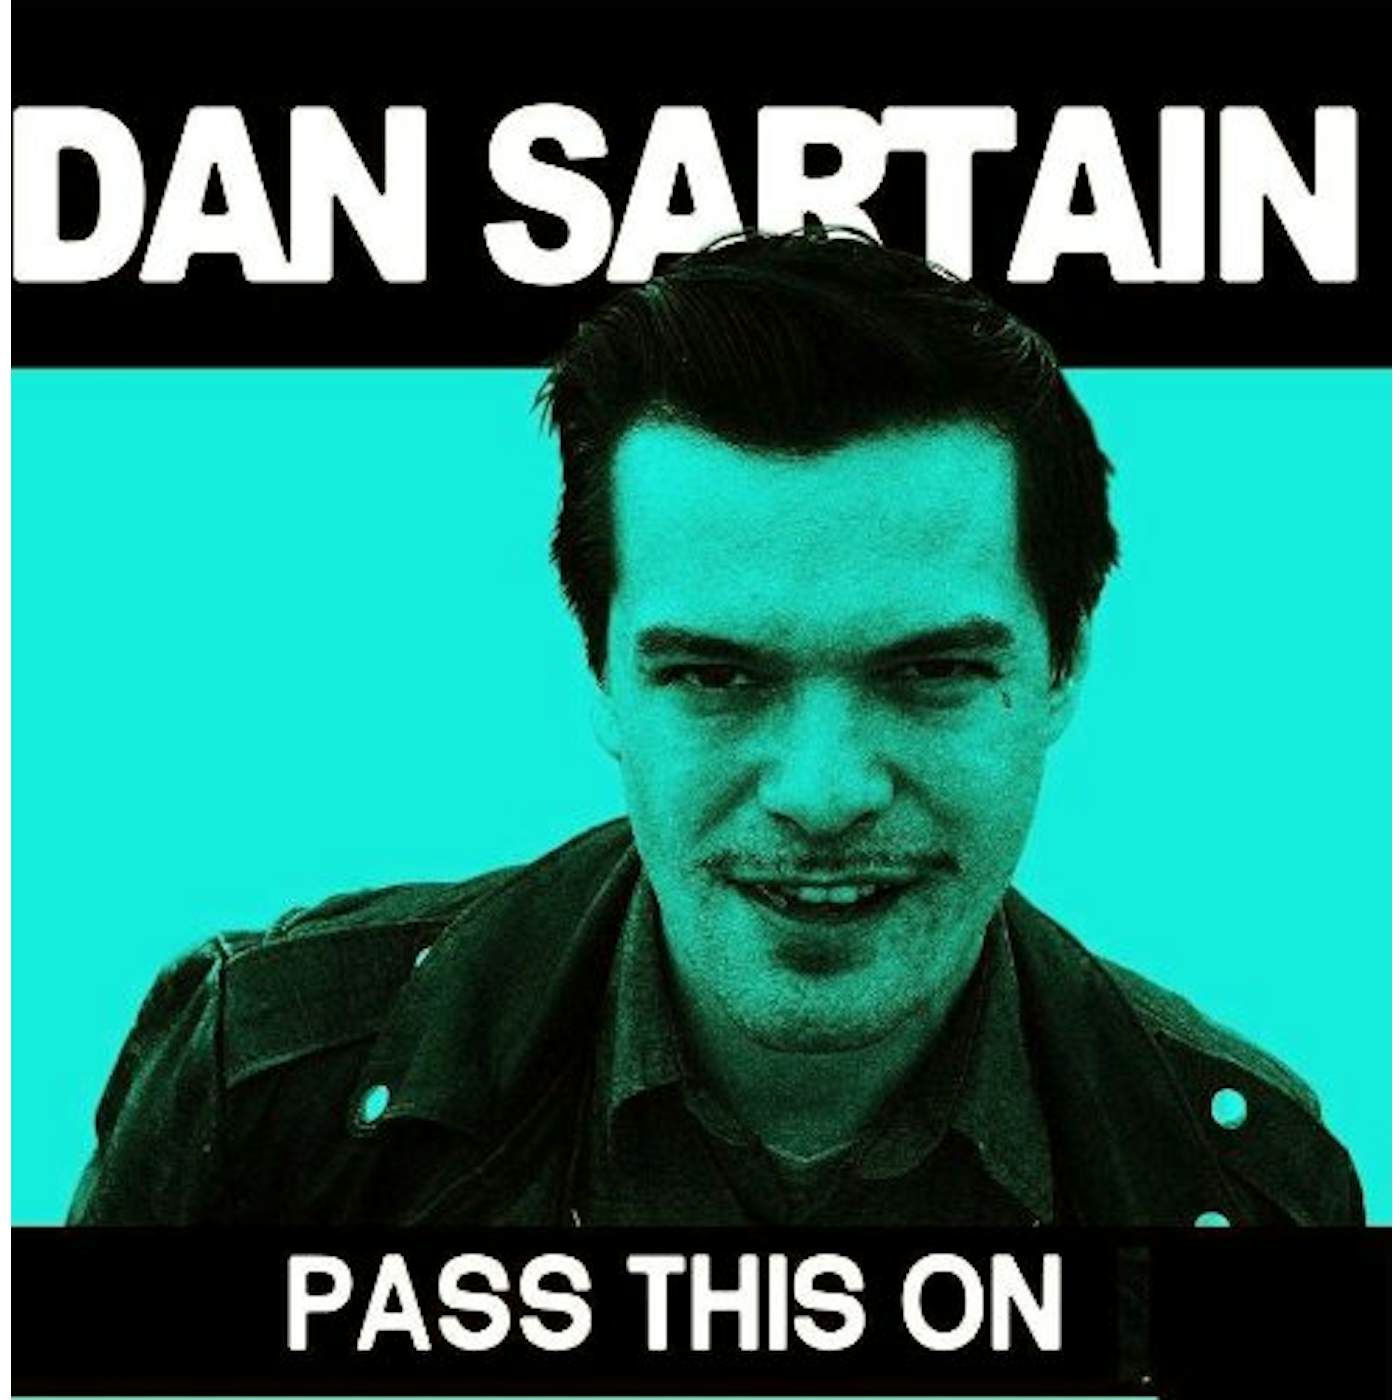 Dan Sartain Pass This On Vinyl Record